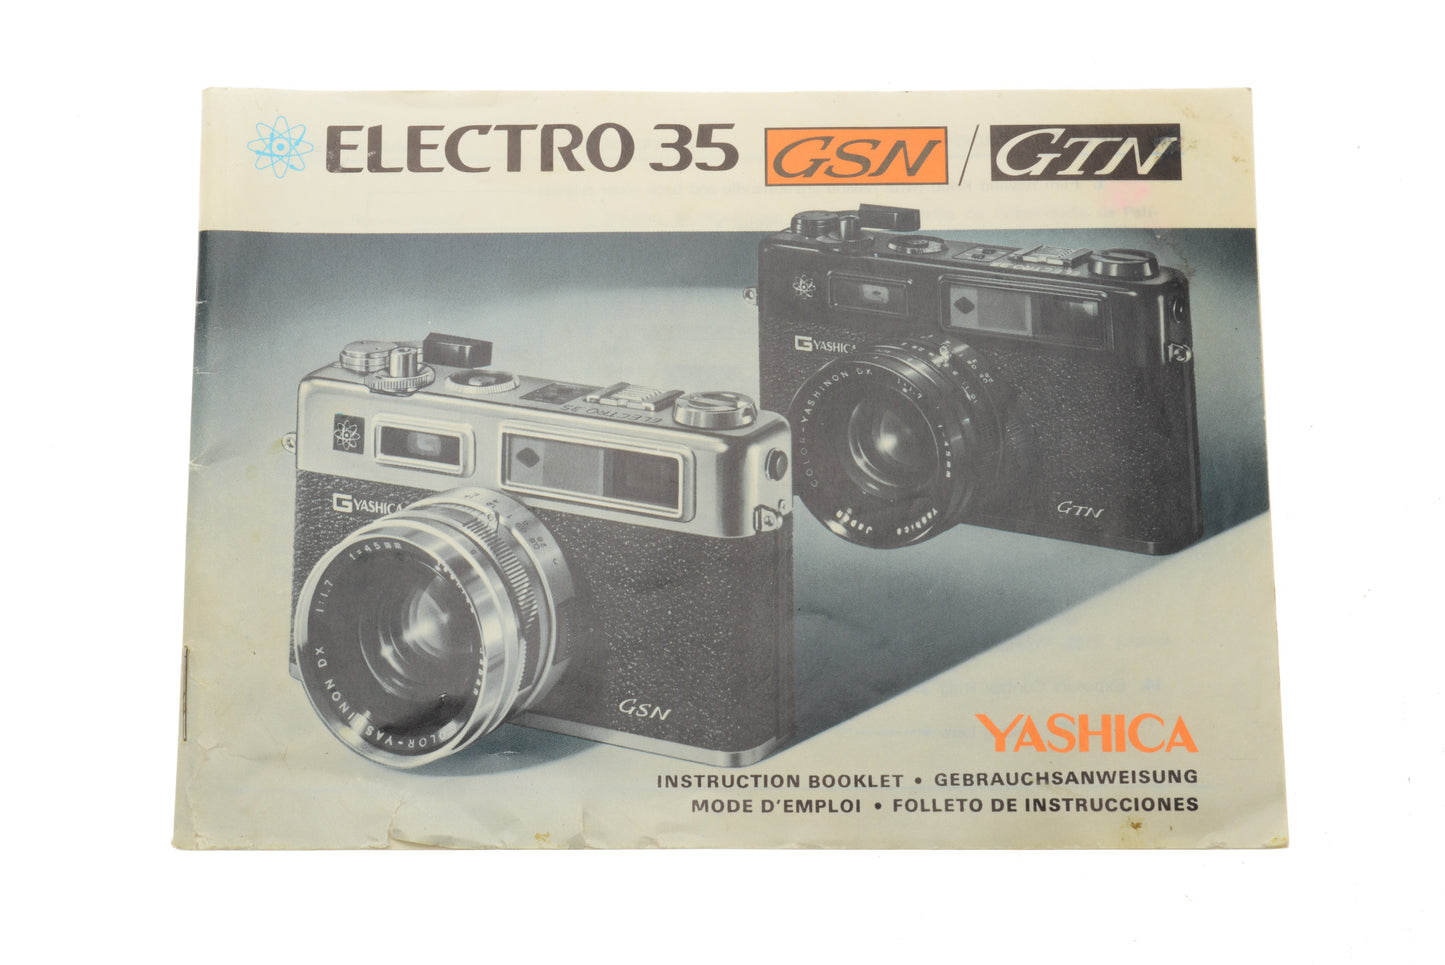 Yashica Electro 35 GSN / GTN Instructions - Accessory